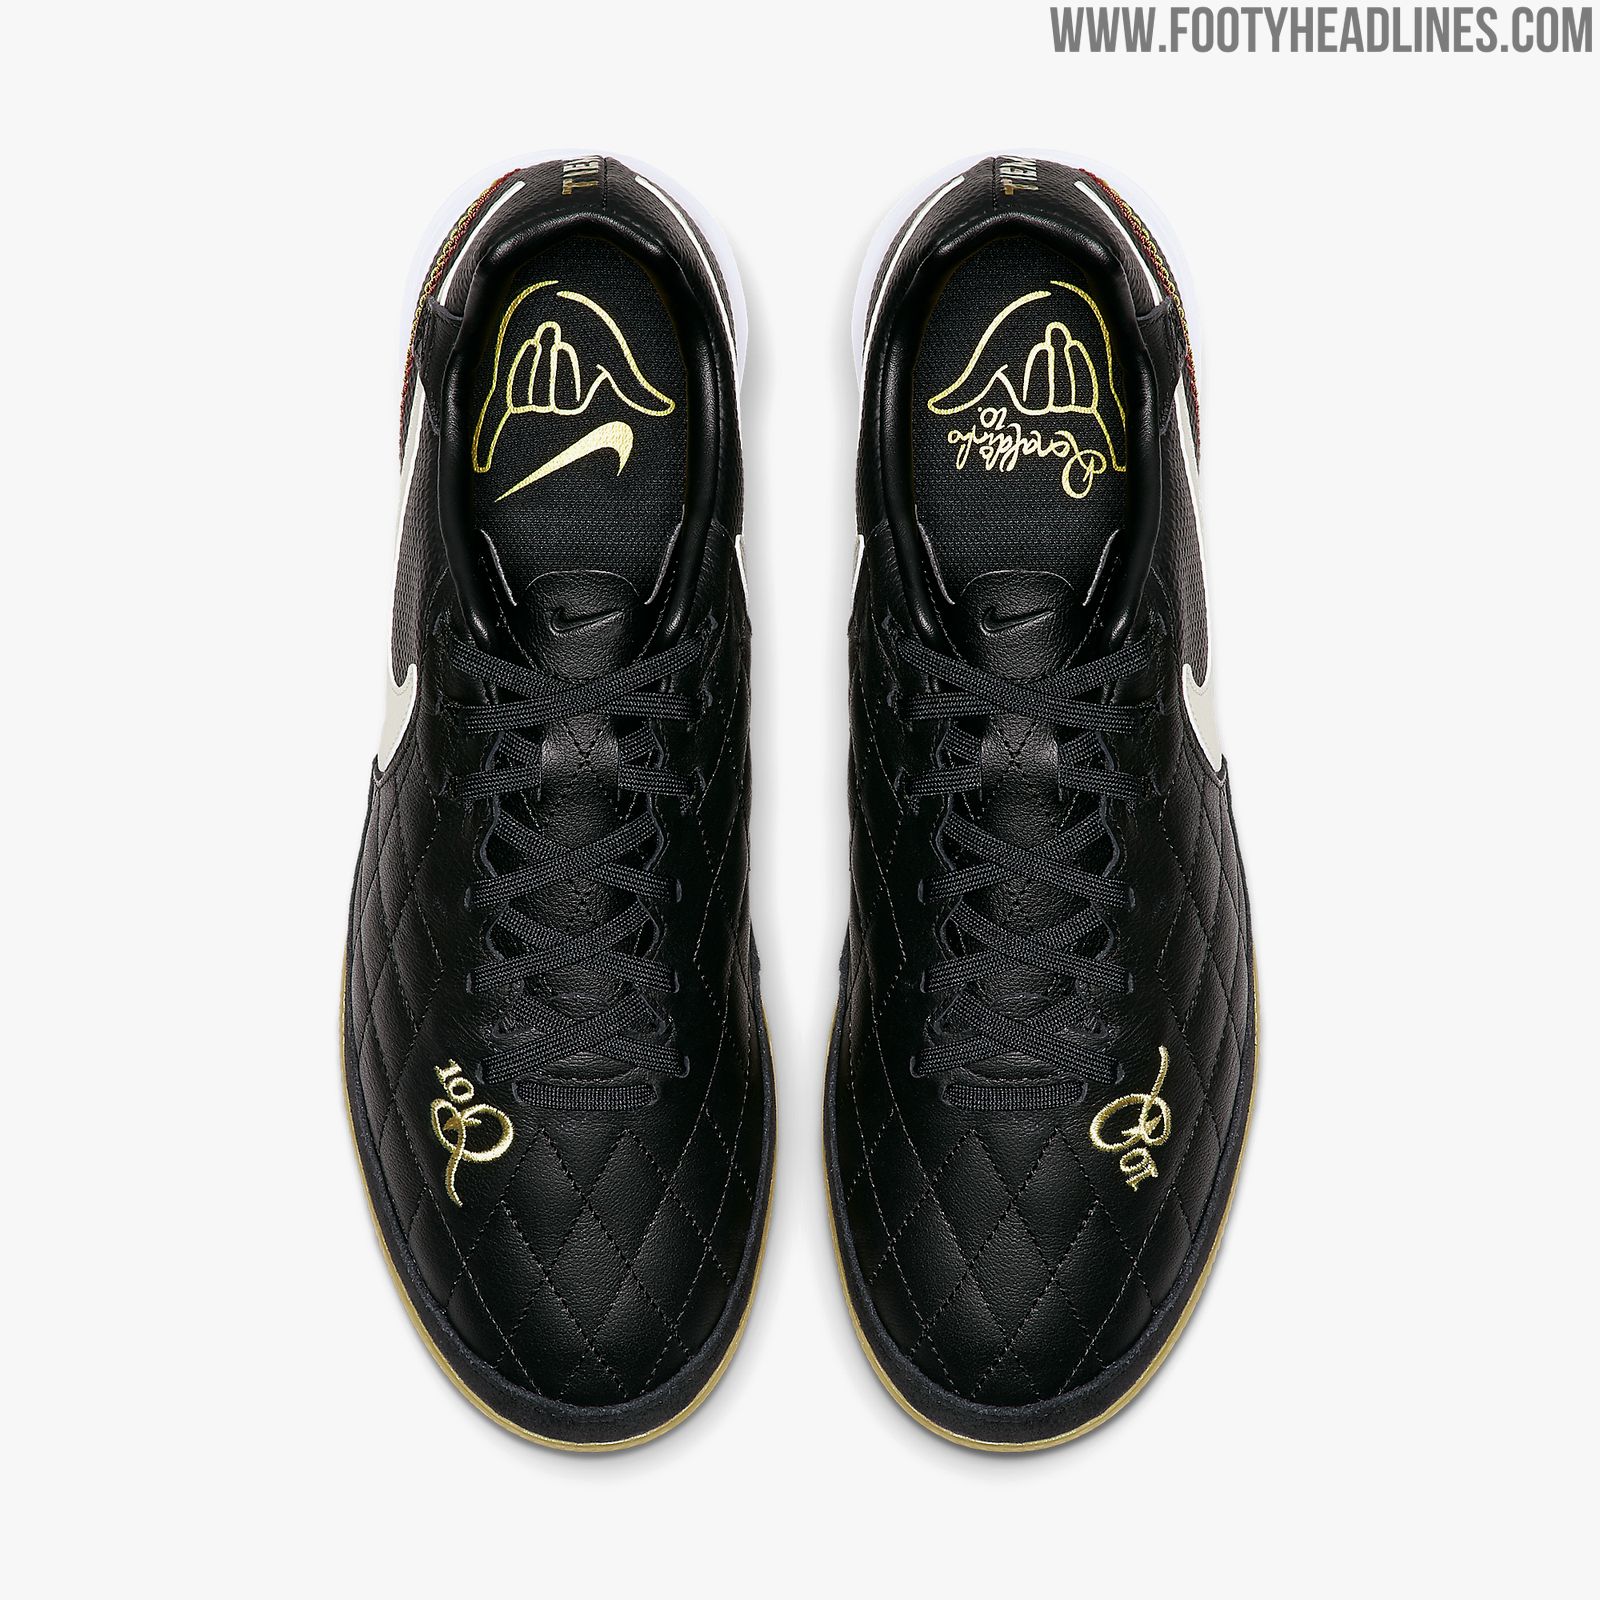 Stunning Black Nike Tiempo Ronaldinho 2019 Boots Released - Footy Headlines